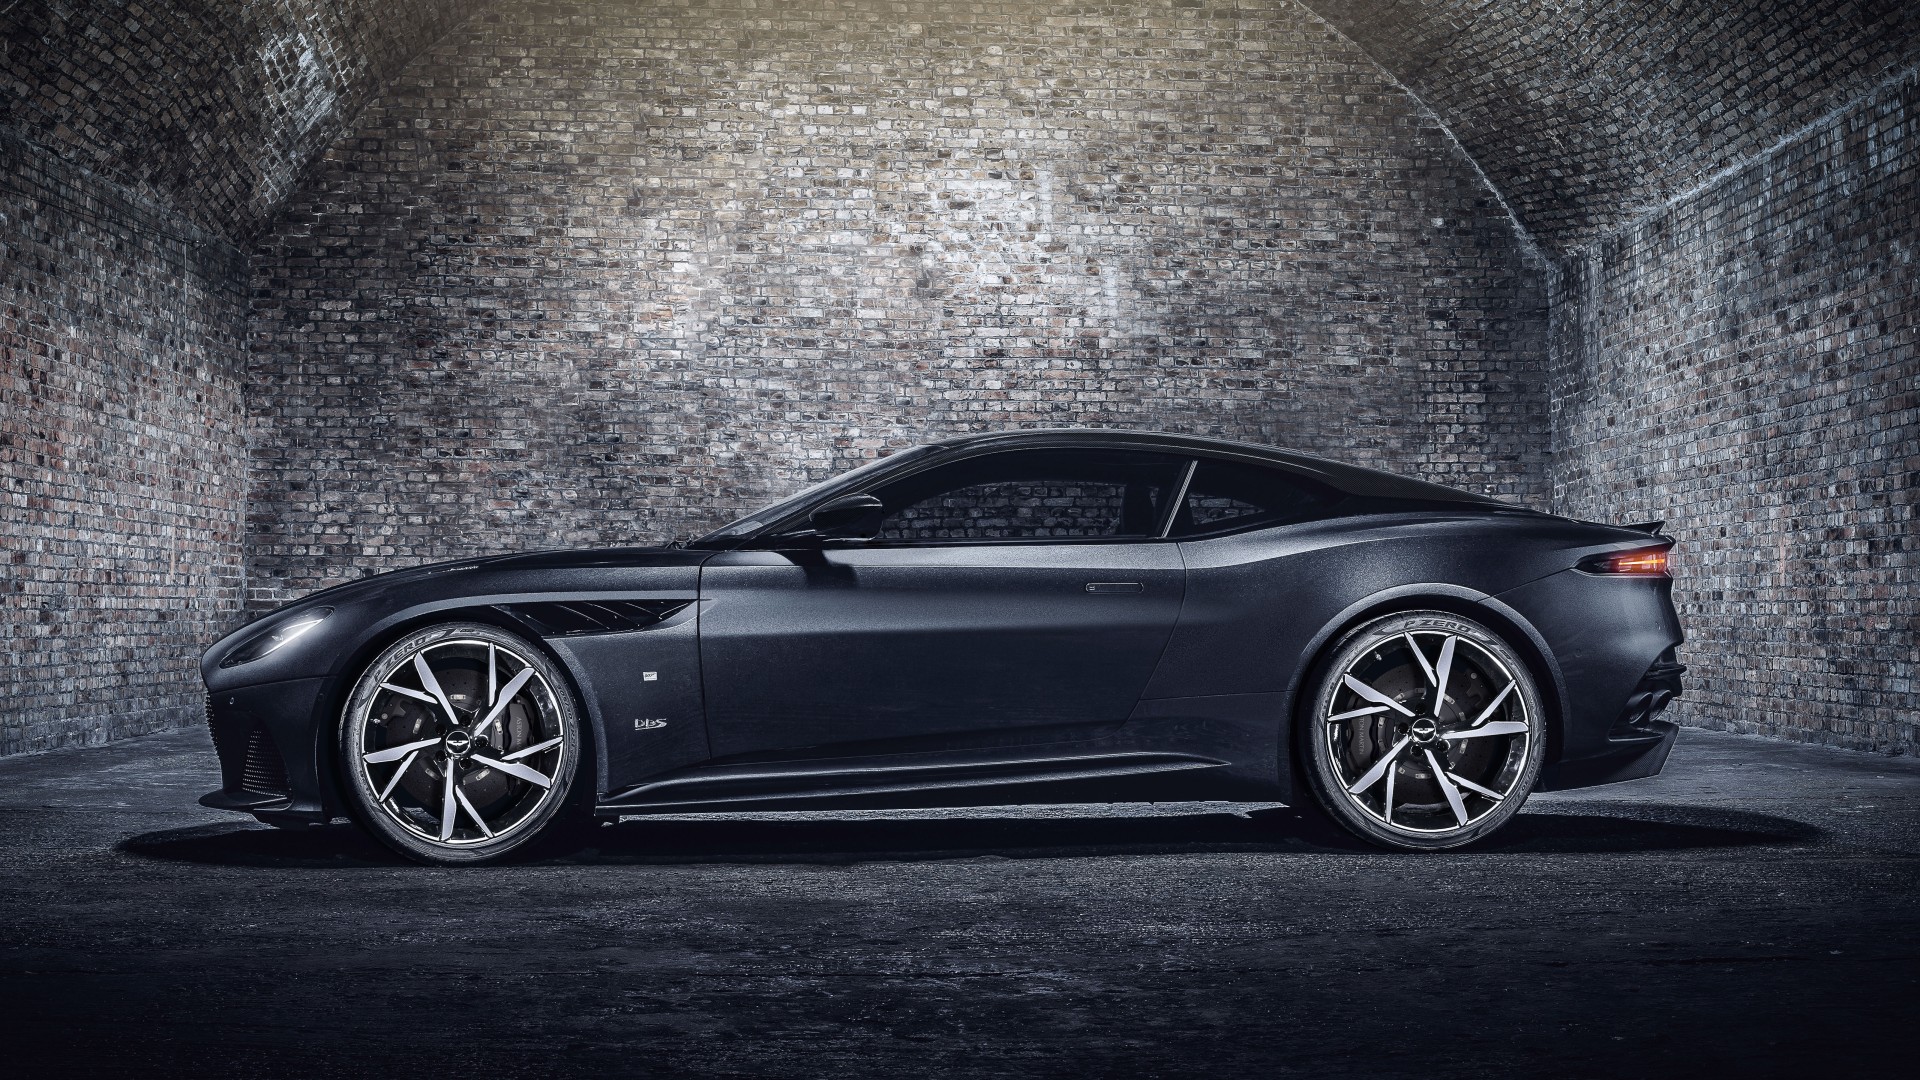 Q by Aston Martin DBS Superleggera 007 Edition 2020 5K Wallpaper | HD